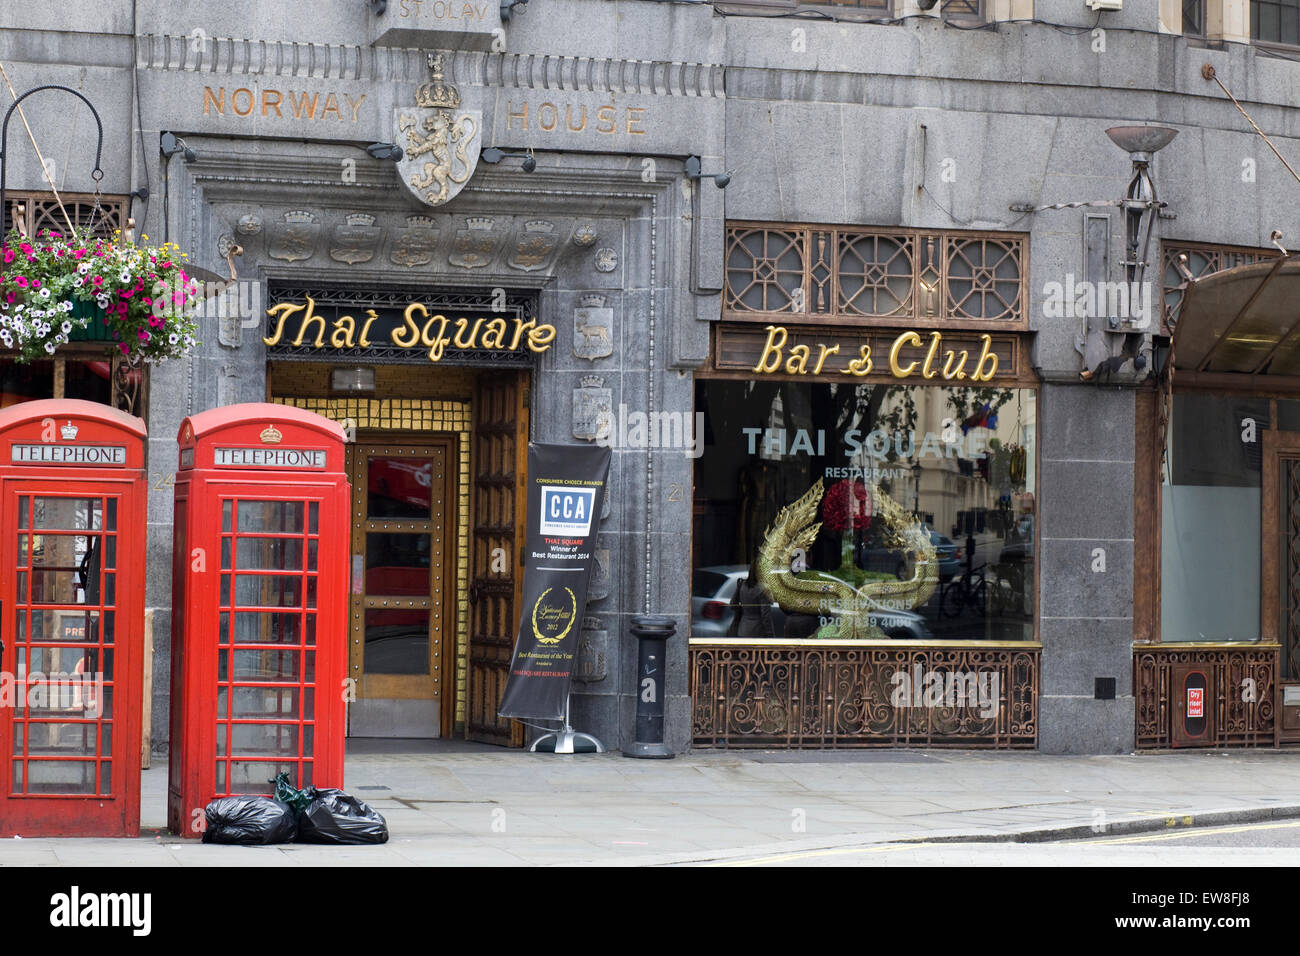 Piazza tailandese Norvegia House Bar e Club facciata in London Inghilterra England Foto Stock